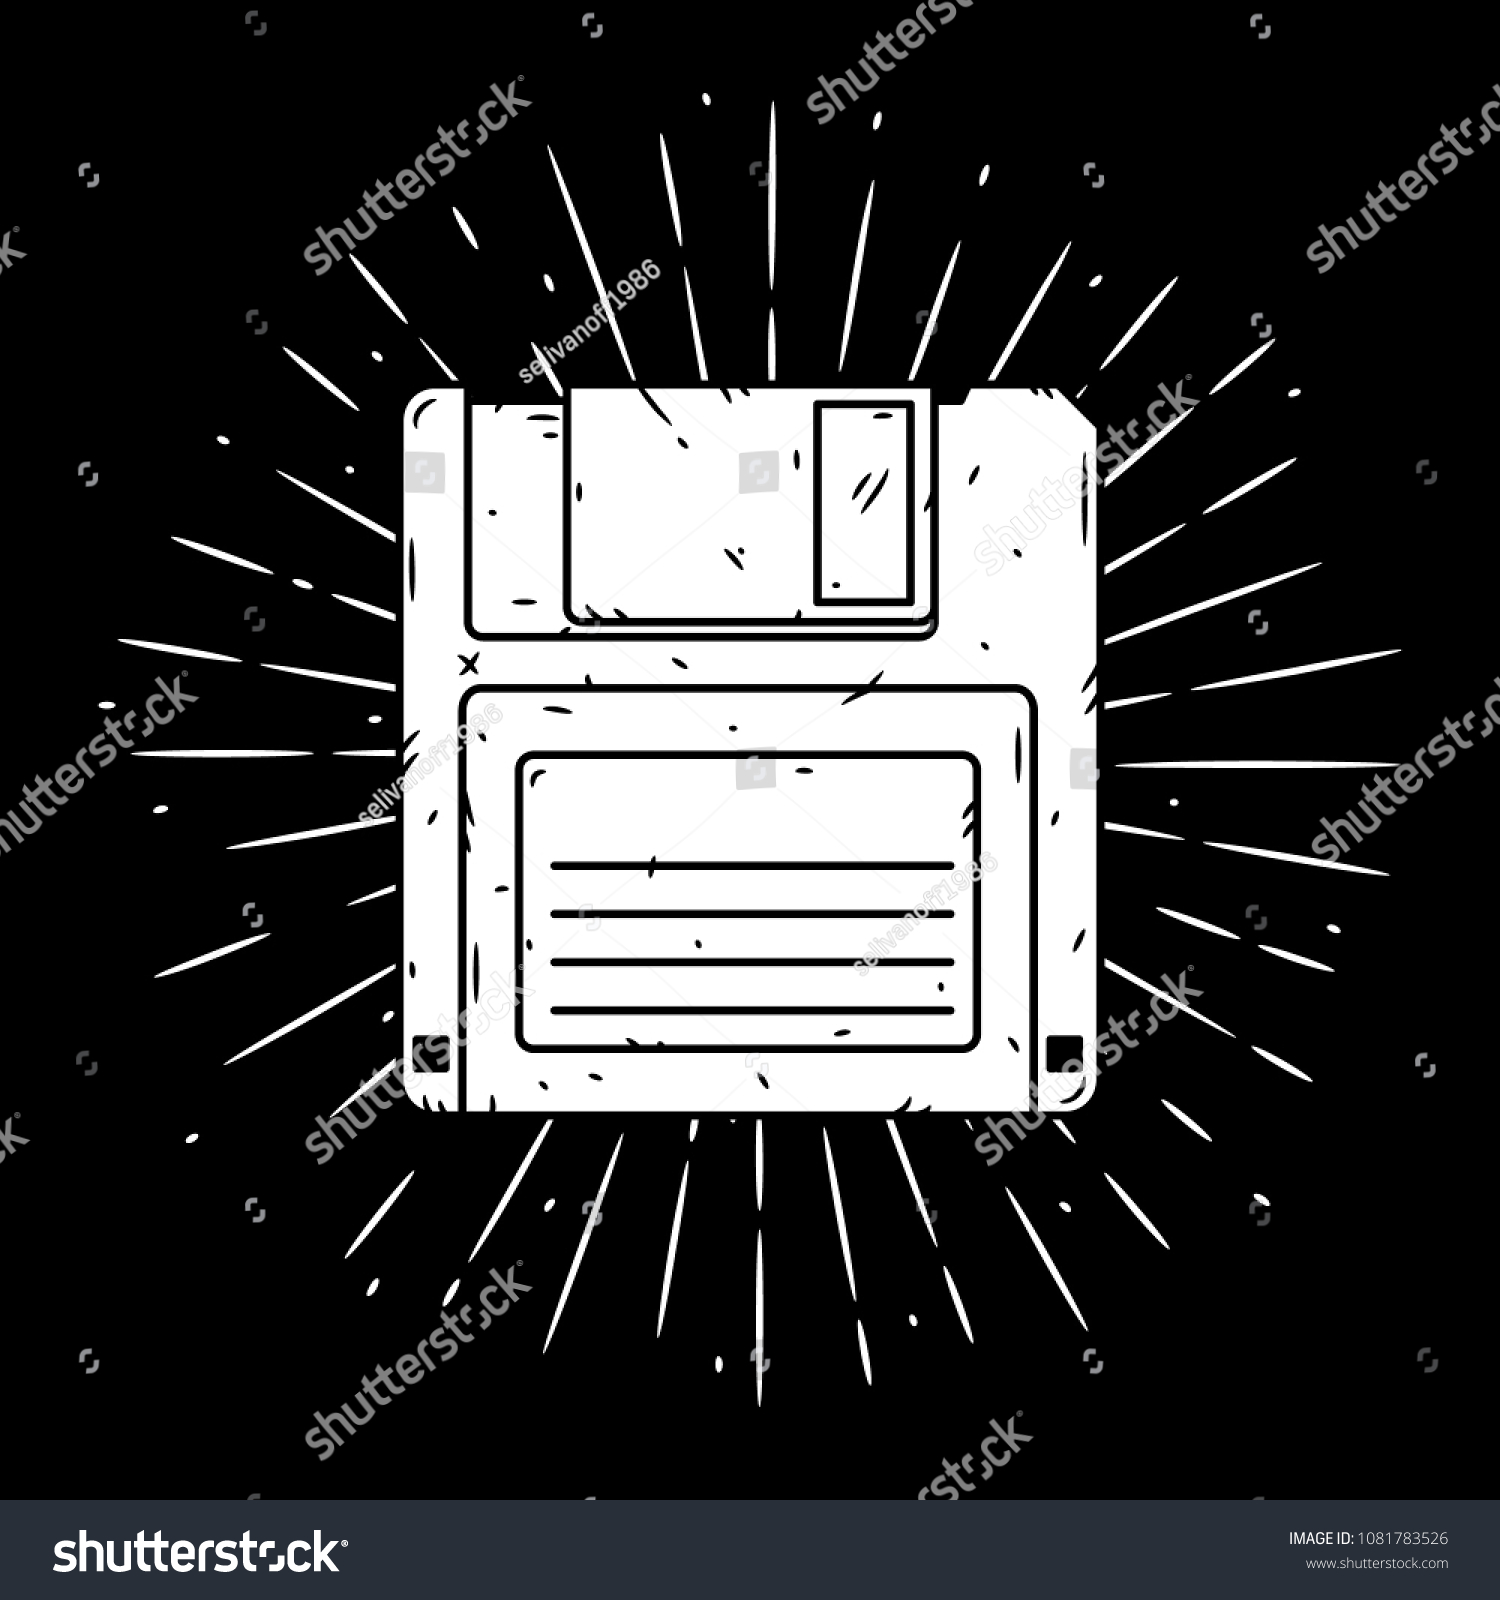 Hand Drawn Vector Illustration Floppy Disk Stock Vector Royalty